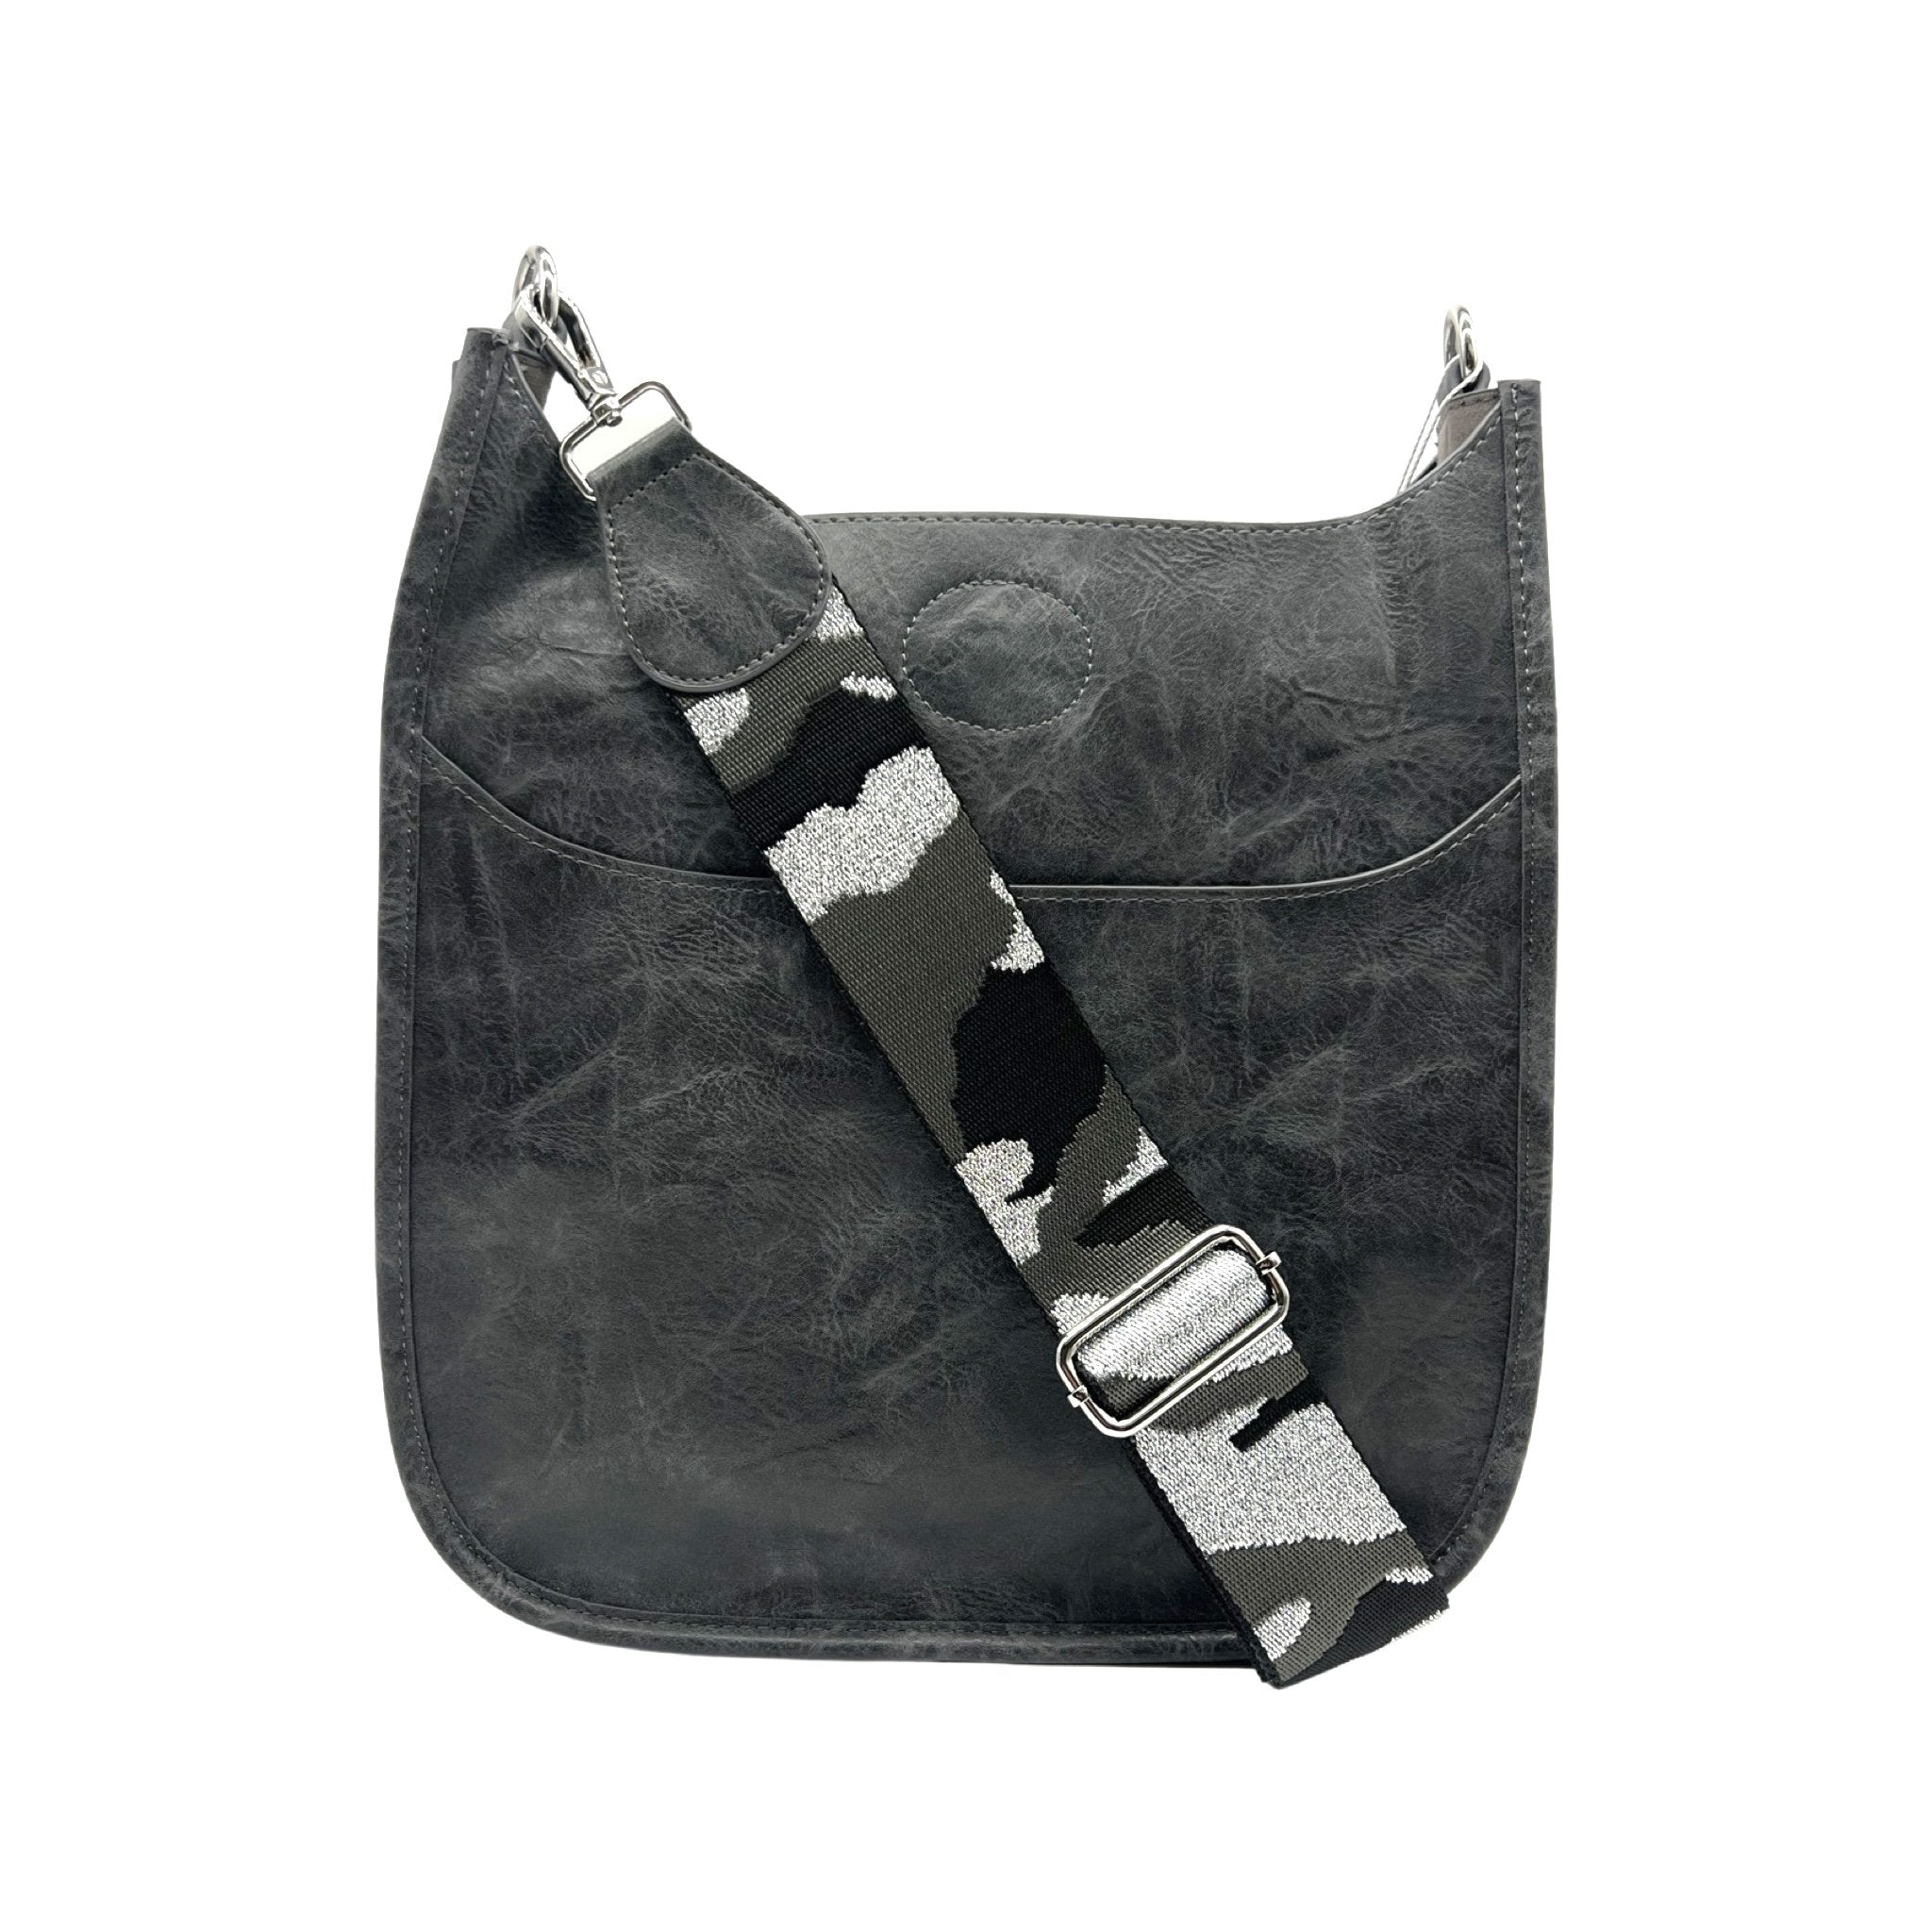 Adven Shoulder Bag Strap Leather Adjustable Metal Hook Snaps Soft Durable Crossbody Bags Straps Multi Colors Handbag Accessories Party Grey, Adult